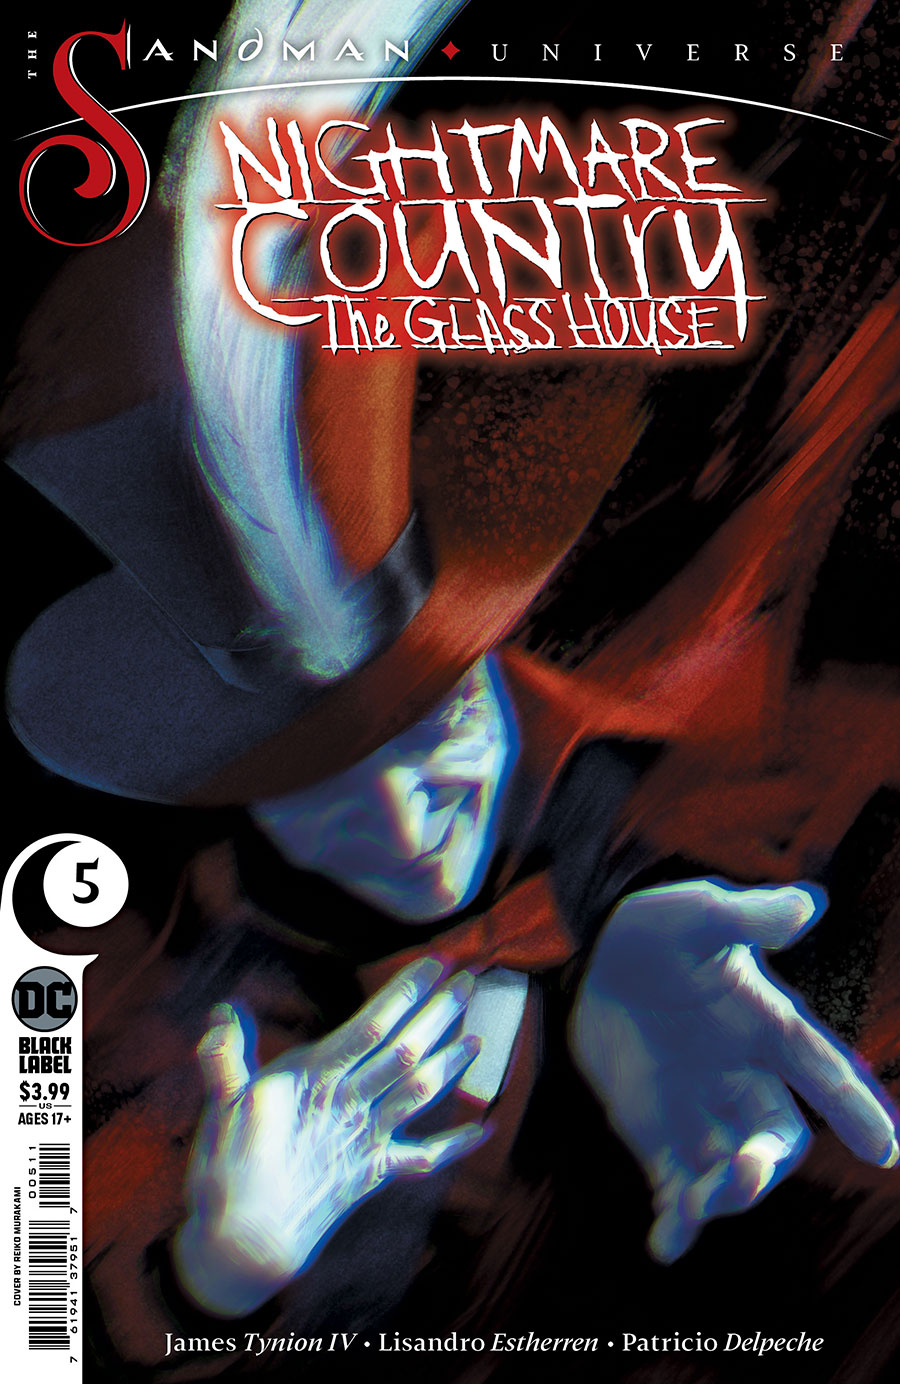 Sandman Universe Nightmare Country The Glass House #5 Cover A Regular Reiko Murakami Cover